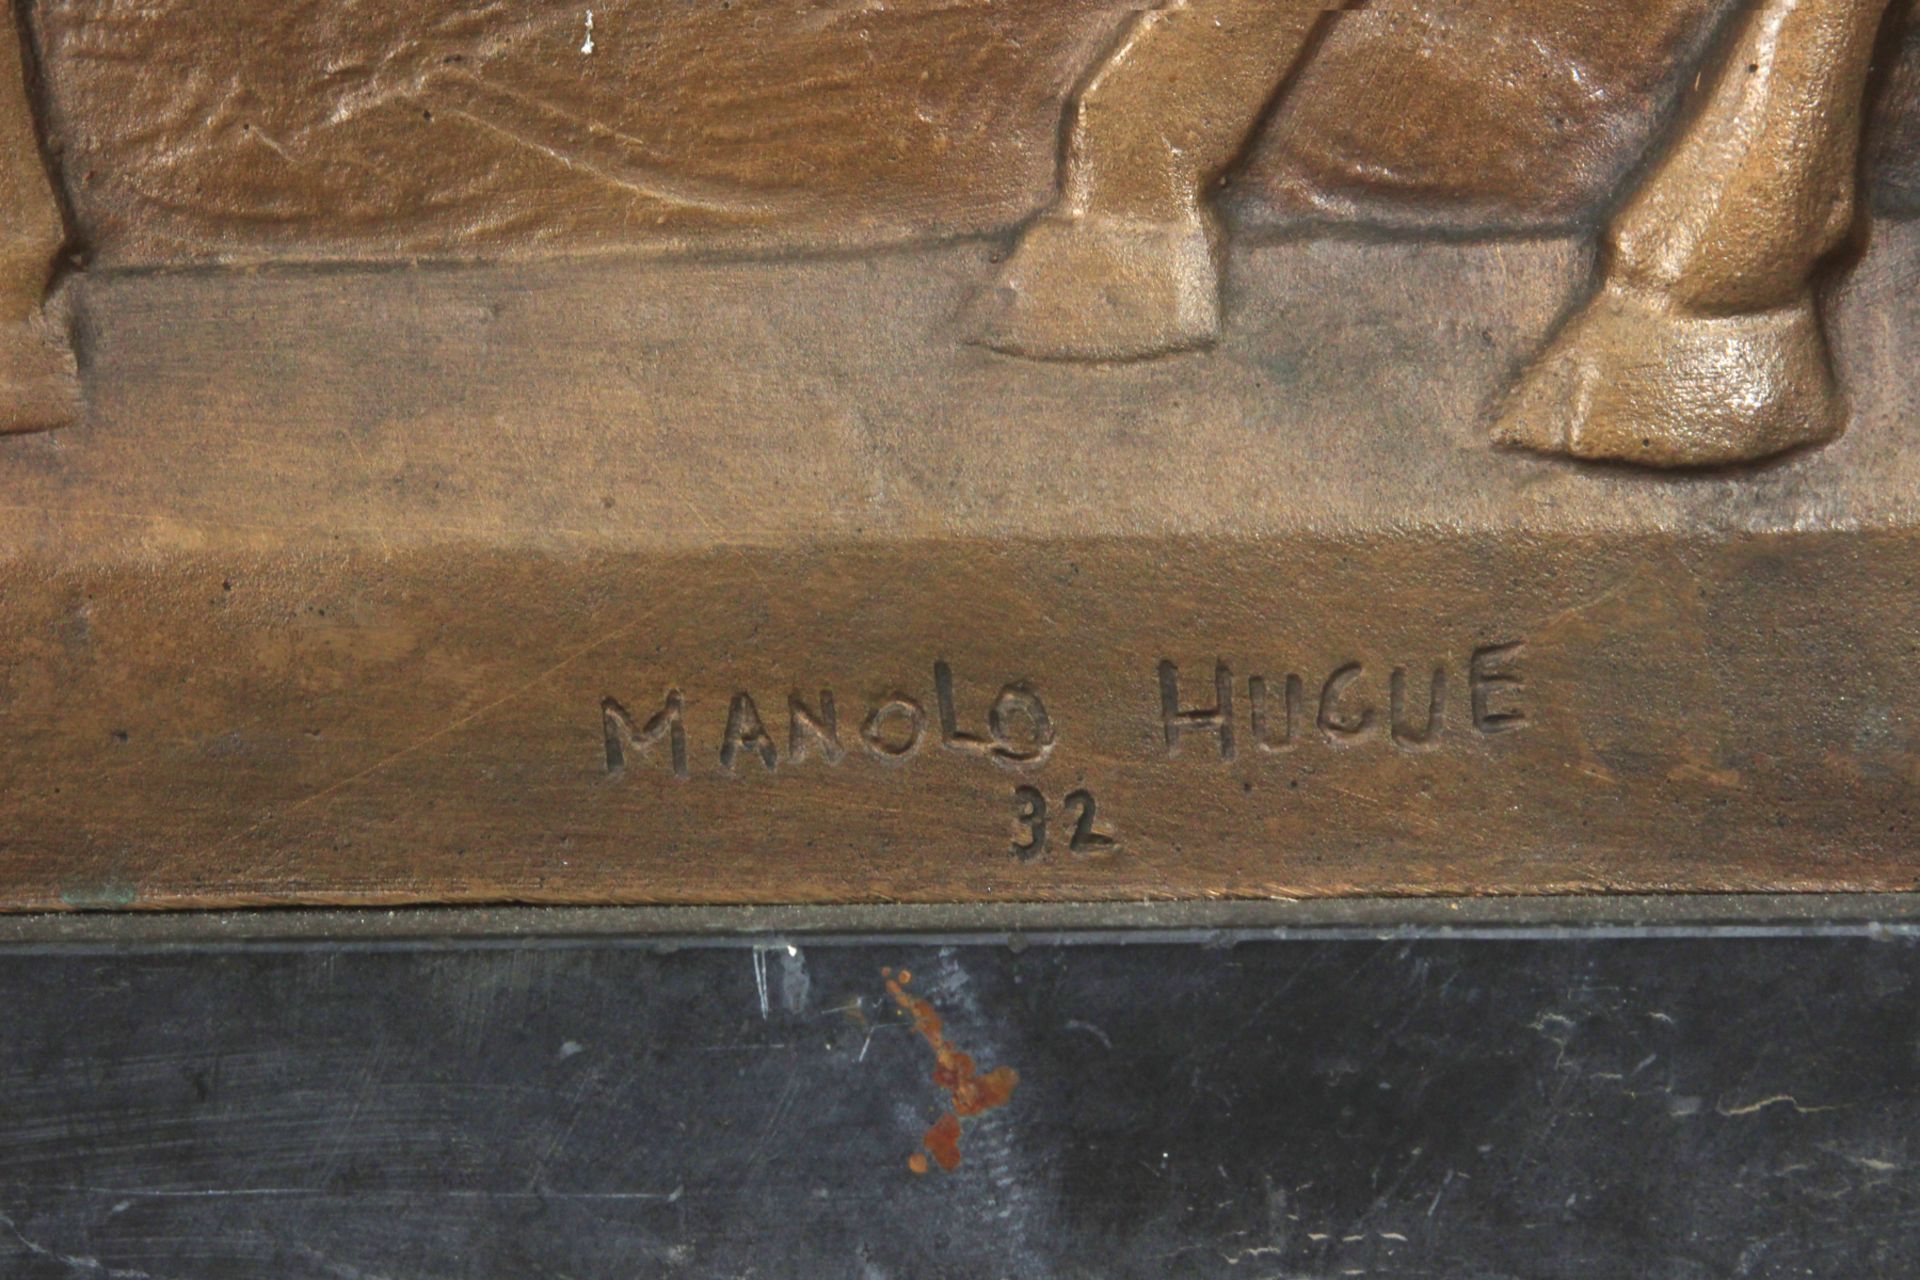 Manolo Hugué - Image 2 of 3